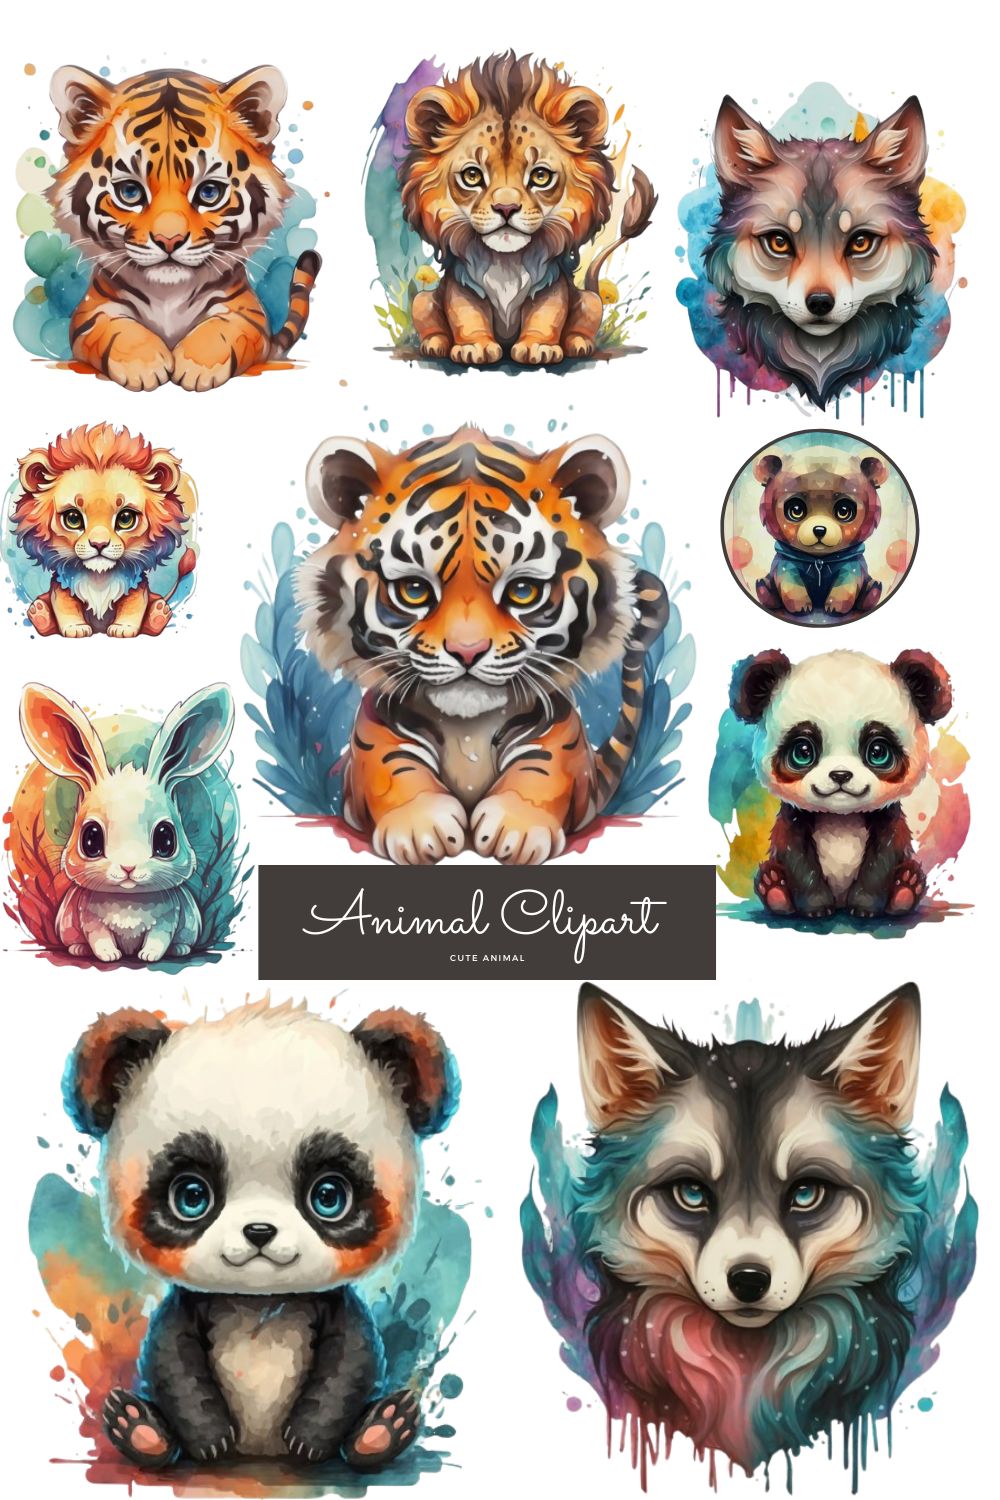 "Adorable Animal Clipart Bundles for Sale" pinterest preview image.